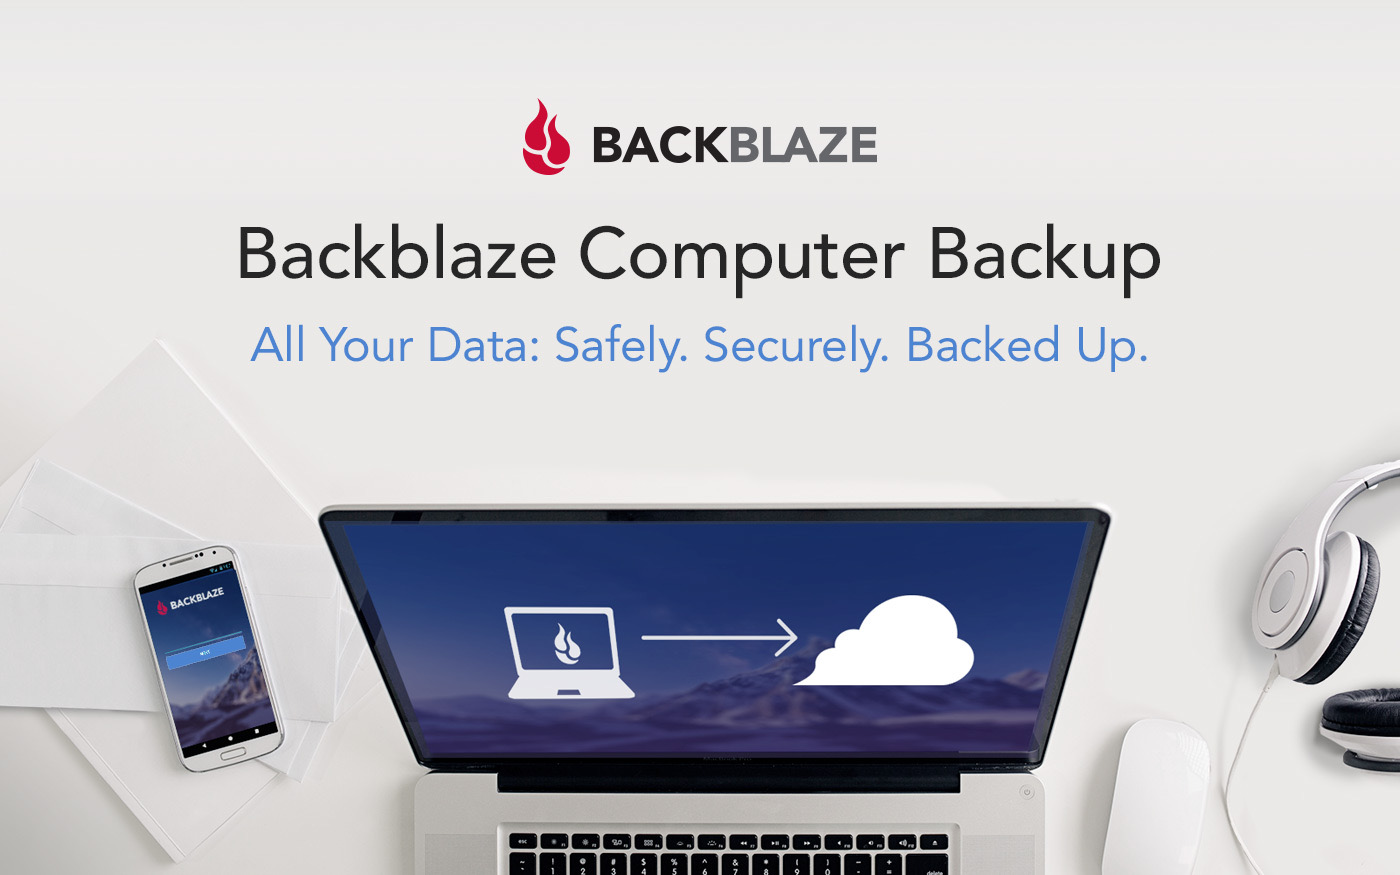 backblaze offer code discount